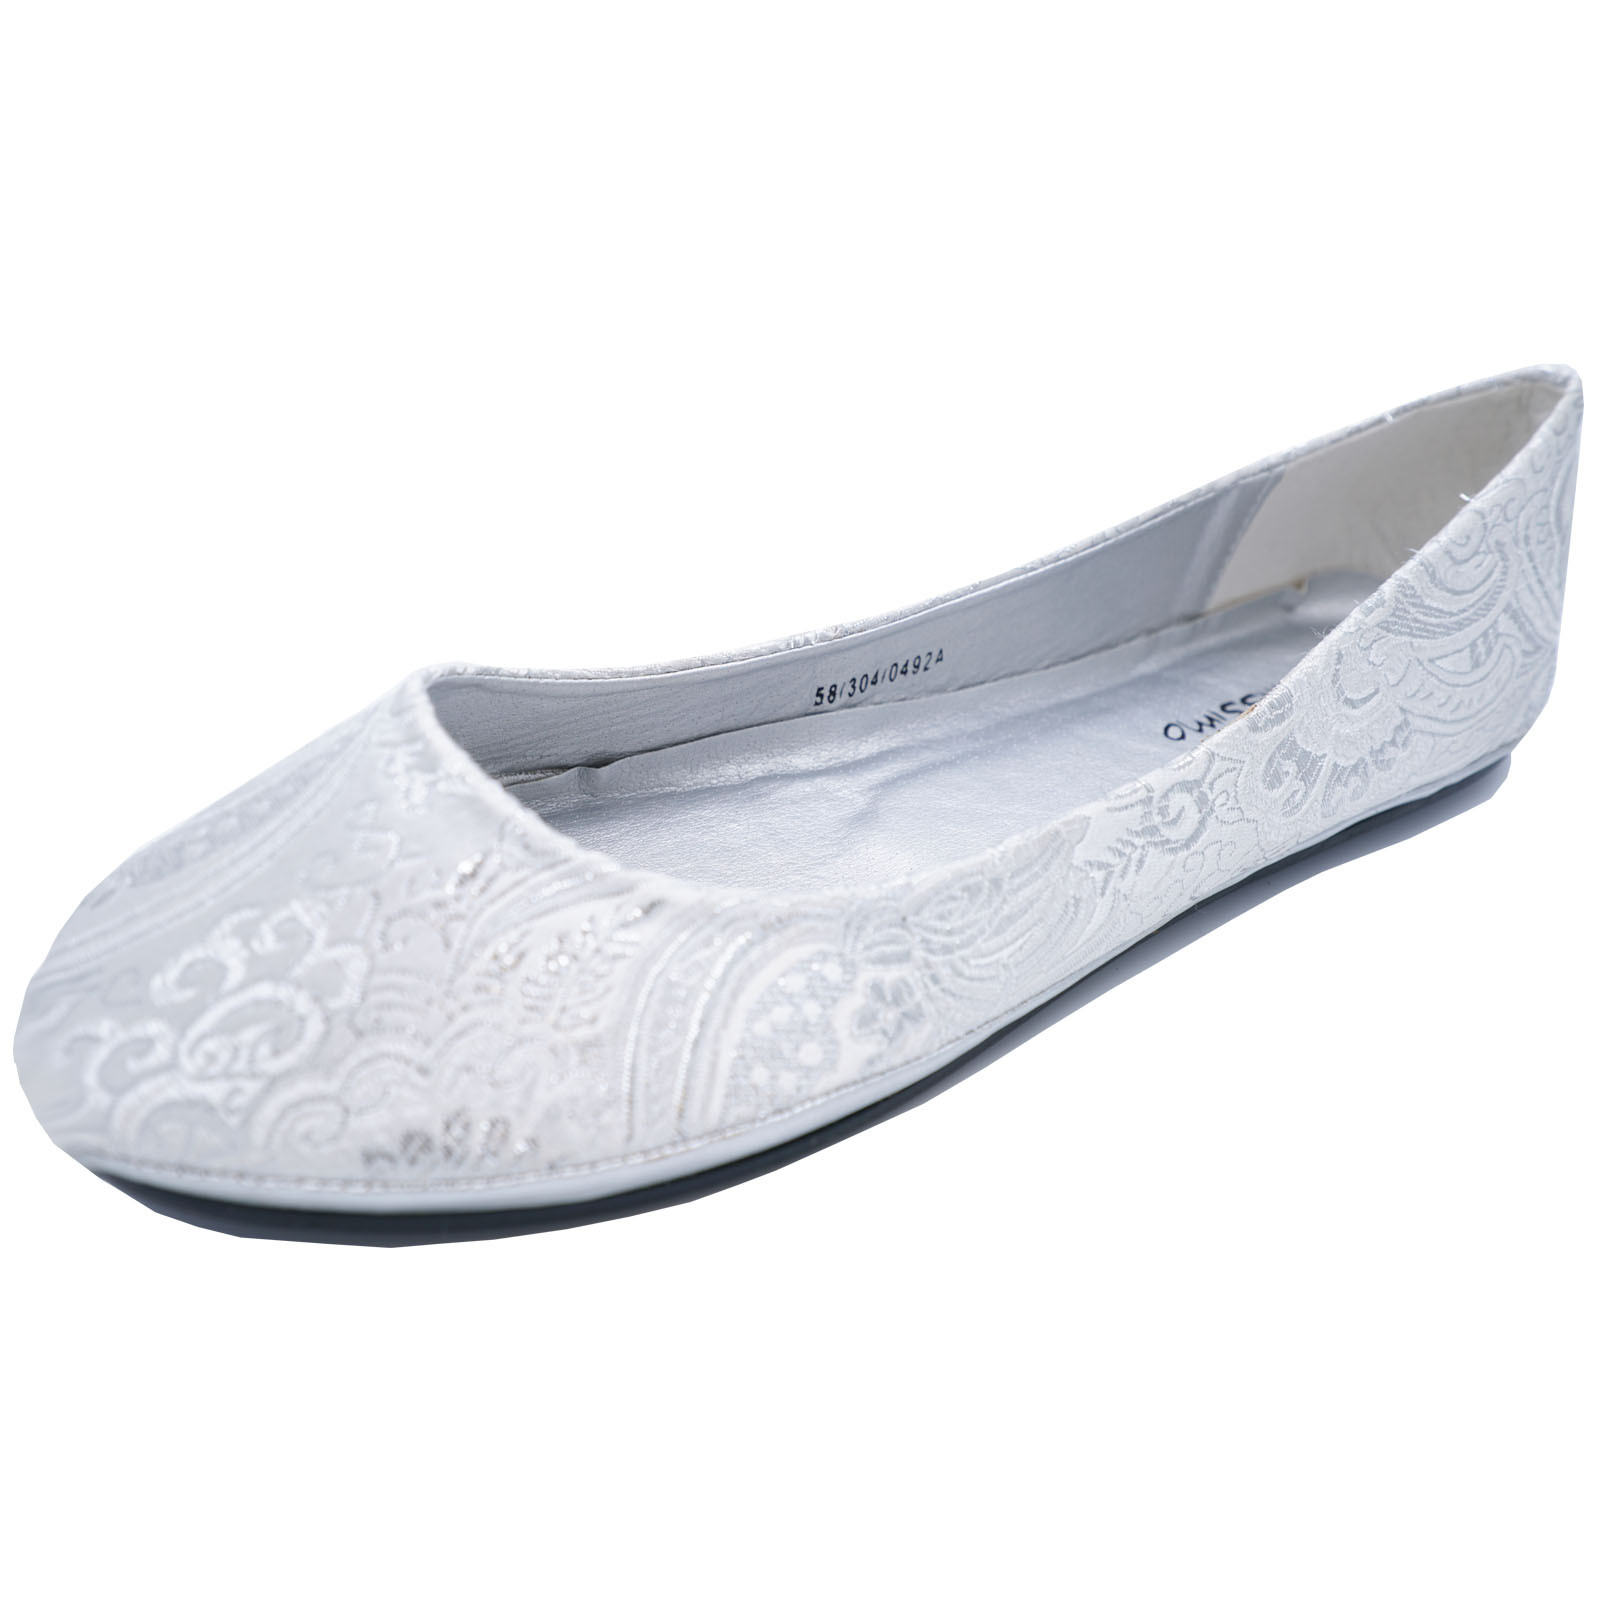 Silver Flat Shoes For Wedding
 LADIES FLAT SILVER SLIP ON WEDDING BRIDESMAID BRIDE FY